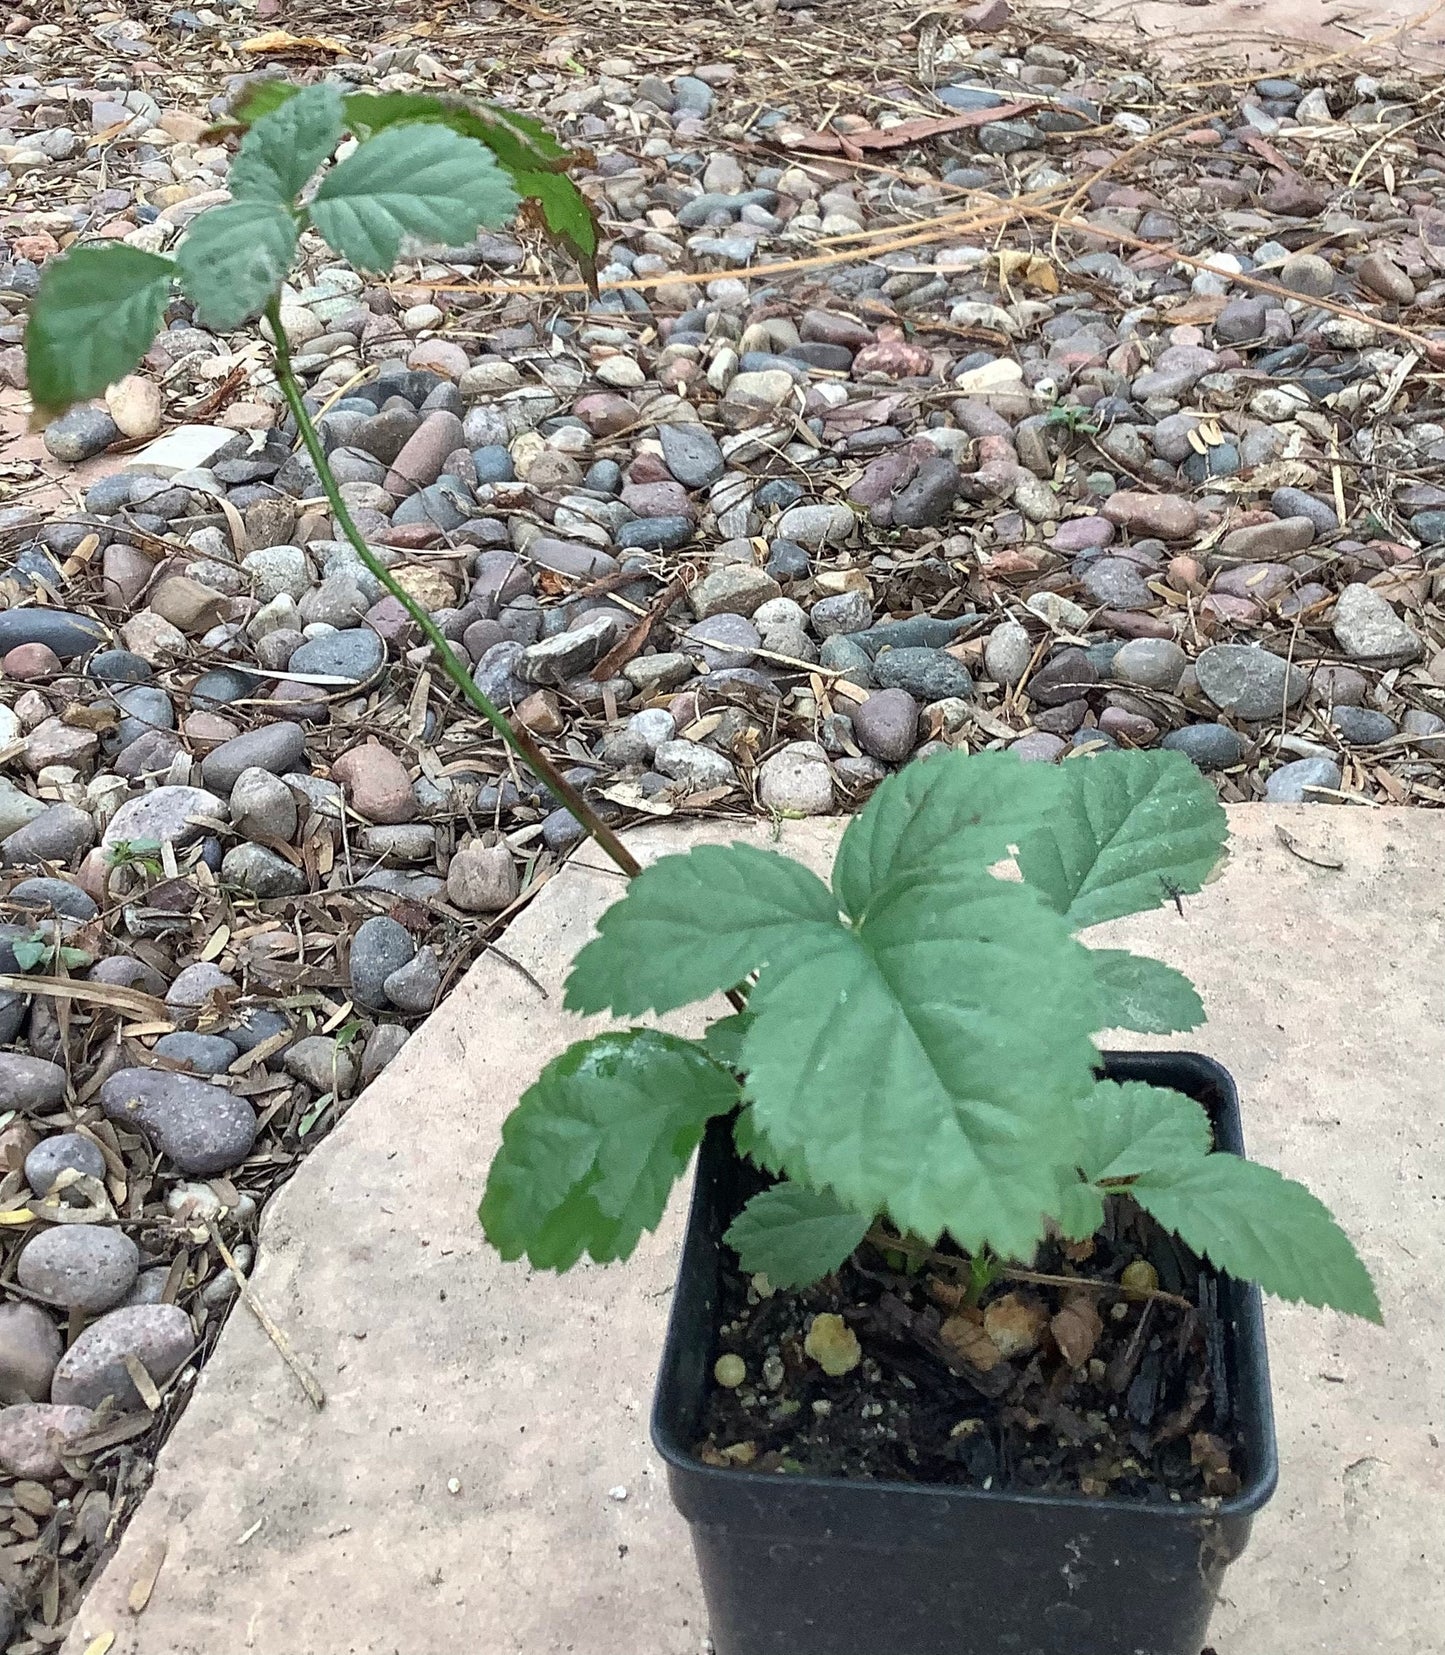 Natchez Thornless Blackberry Plant